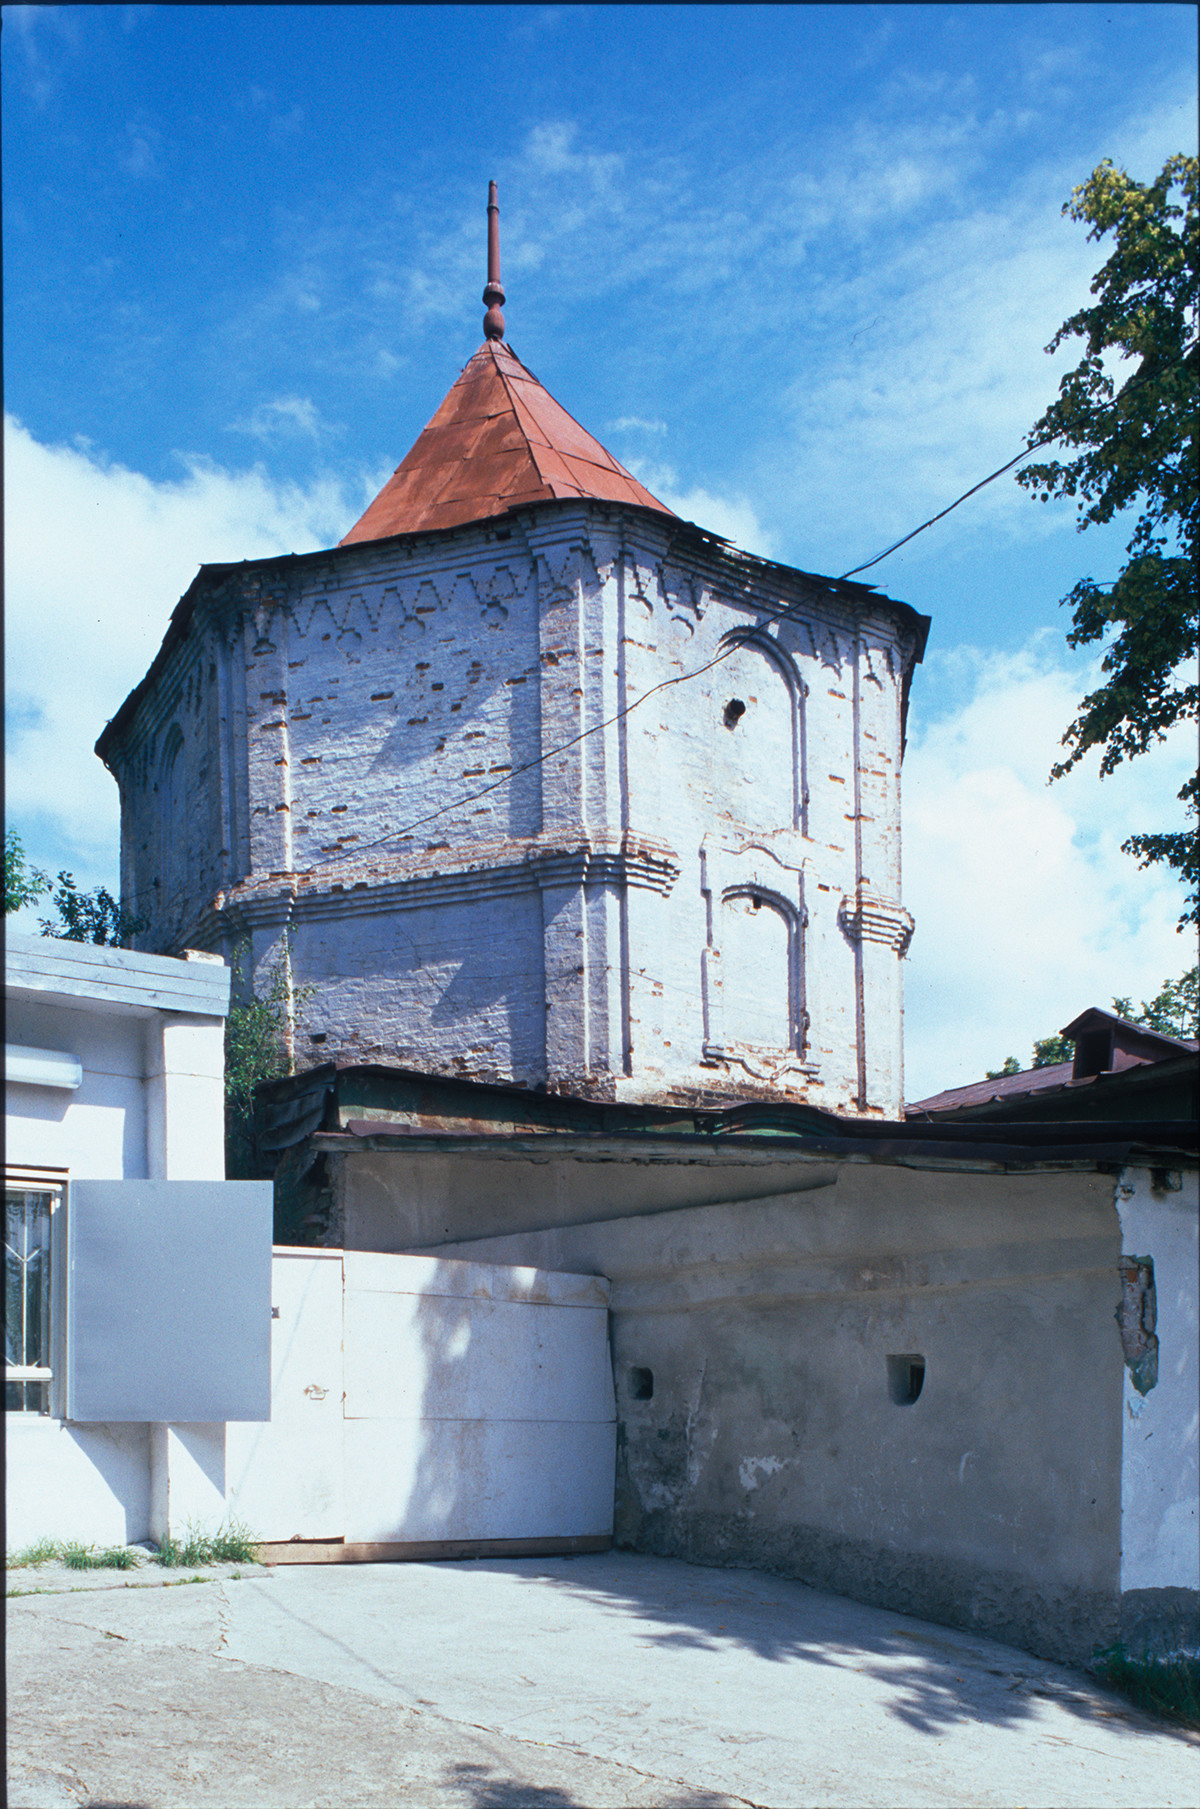 Tower on former Demidov estate at Kyshtym factory. Built ca. 1760 by Nikita Demidov. July 14, 2003.